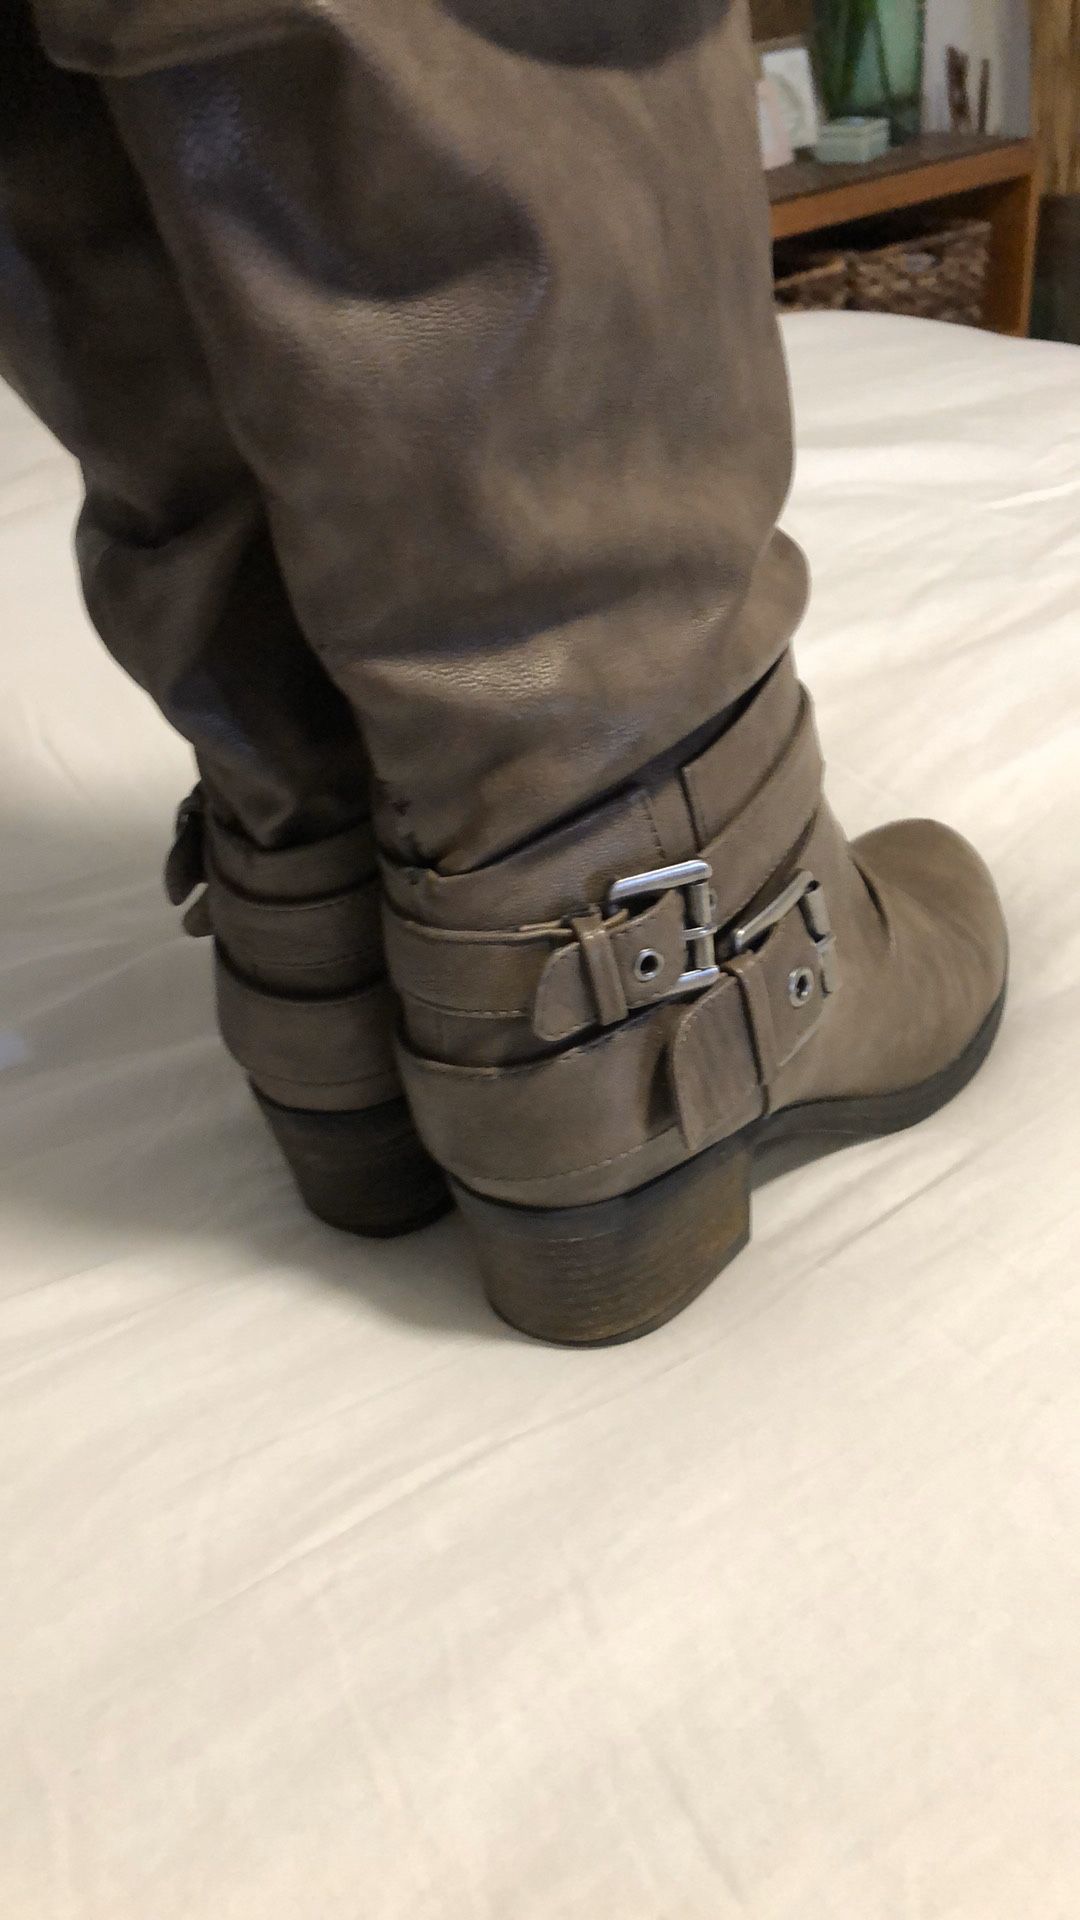 CARLOS Tall boots w/ buckles side zip heels USED